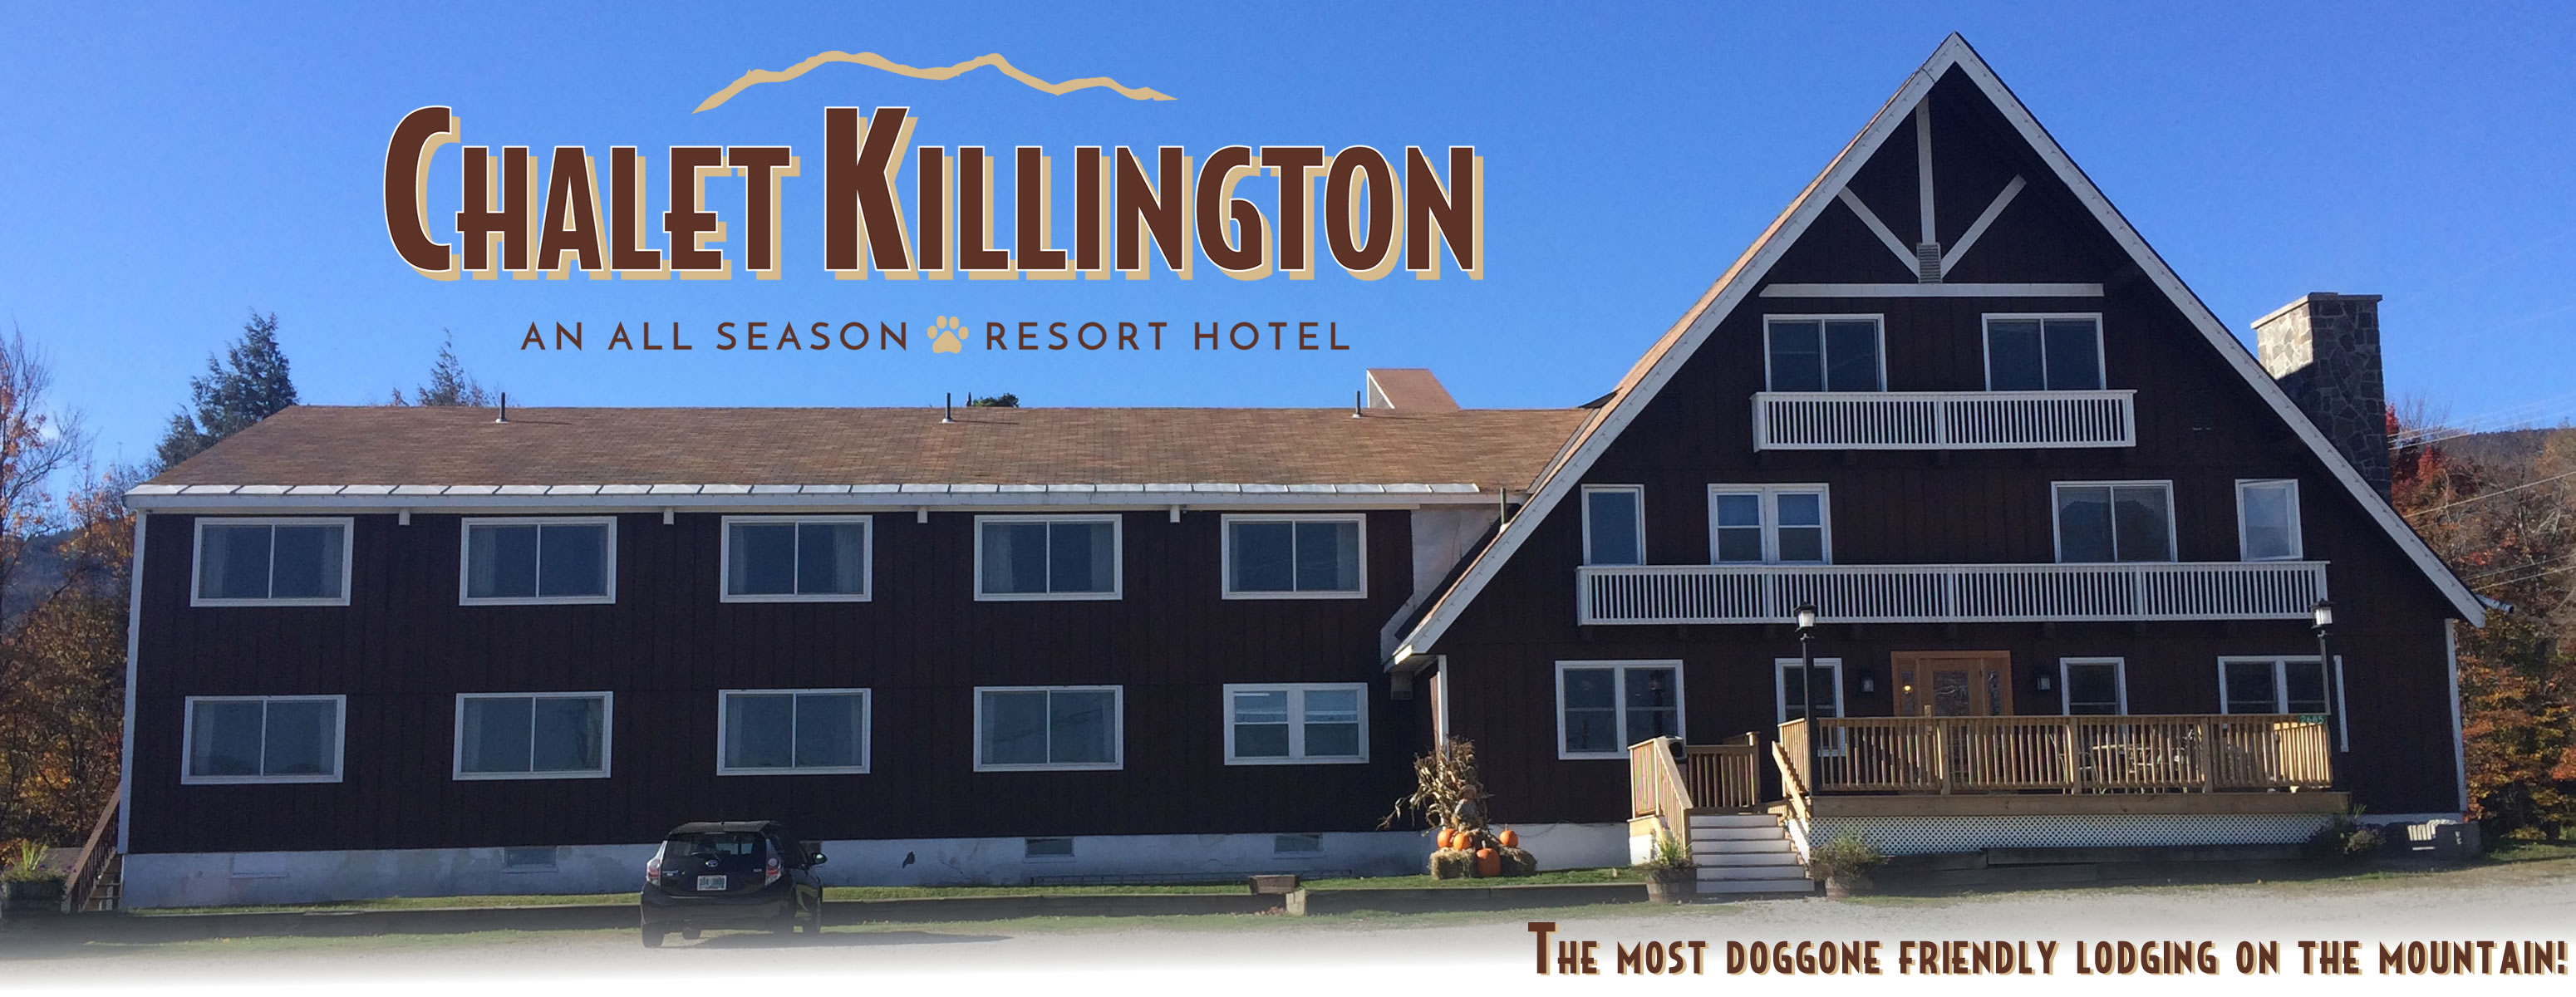 Chalet Killington, an all season resort hotel